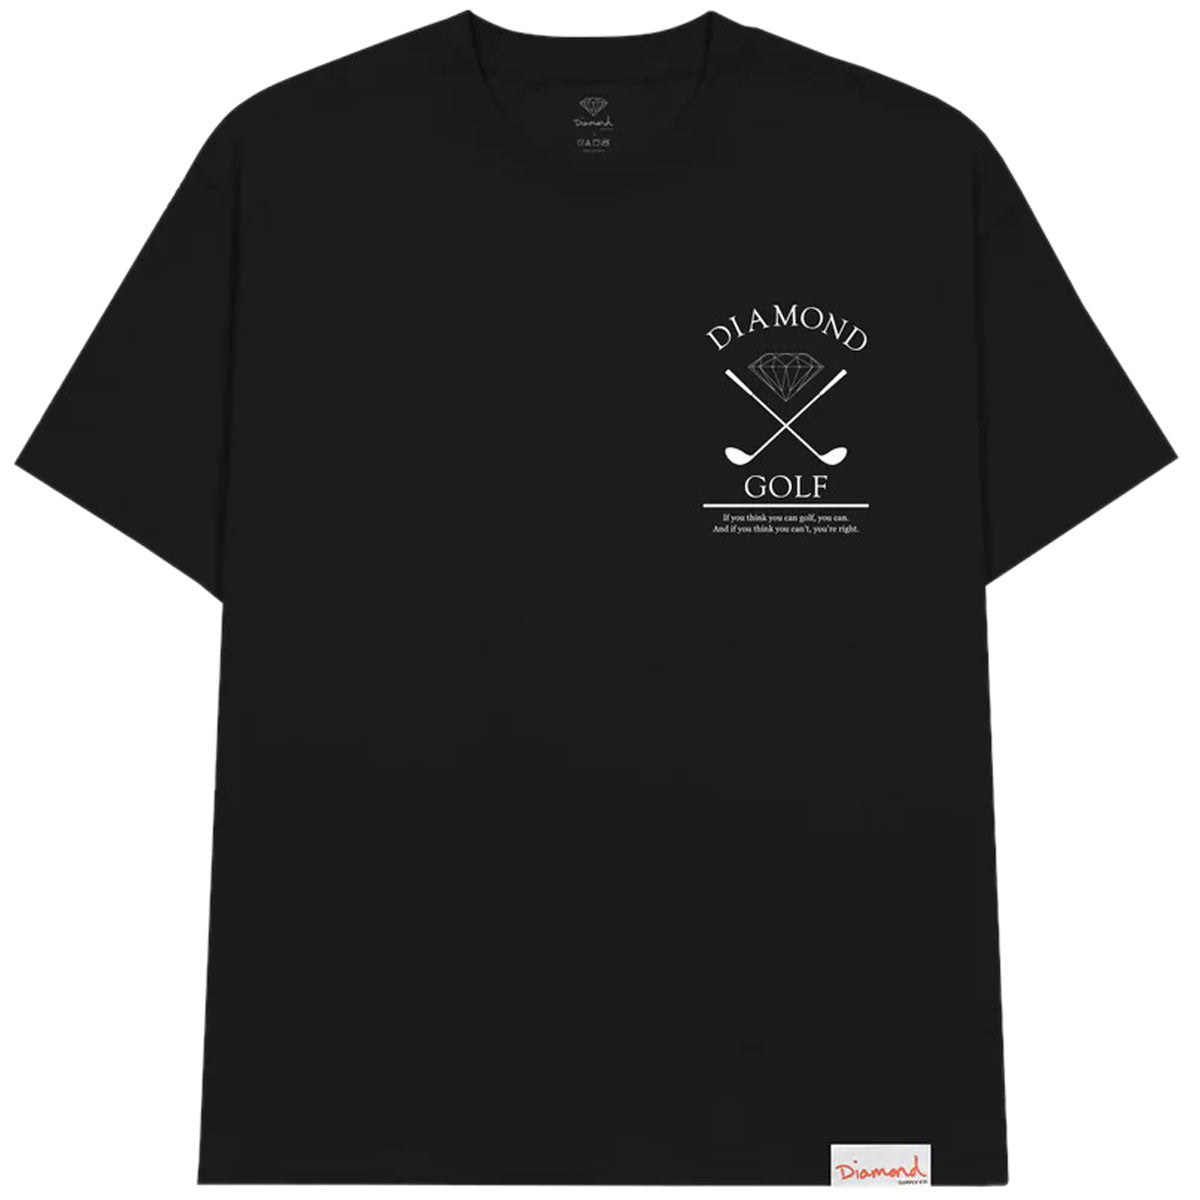 Diamond Supply Co. Golf T-Shirt - Black image 1